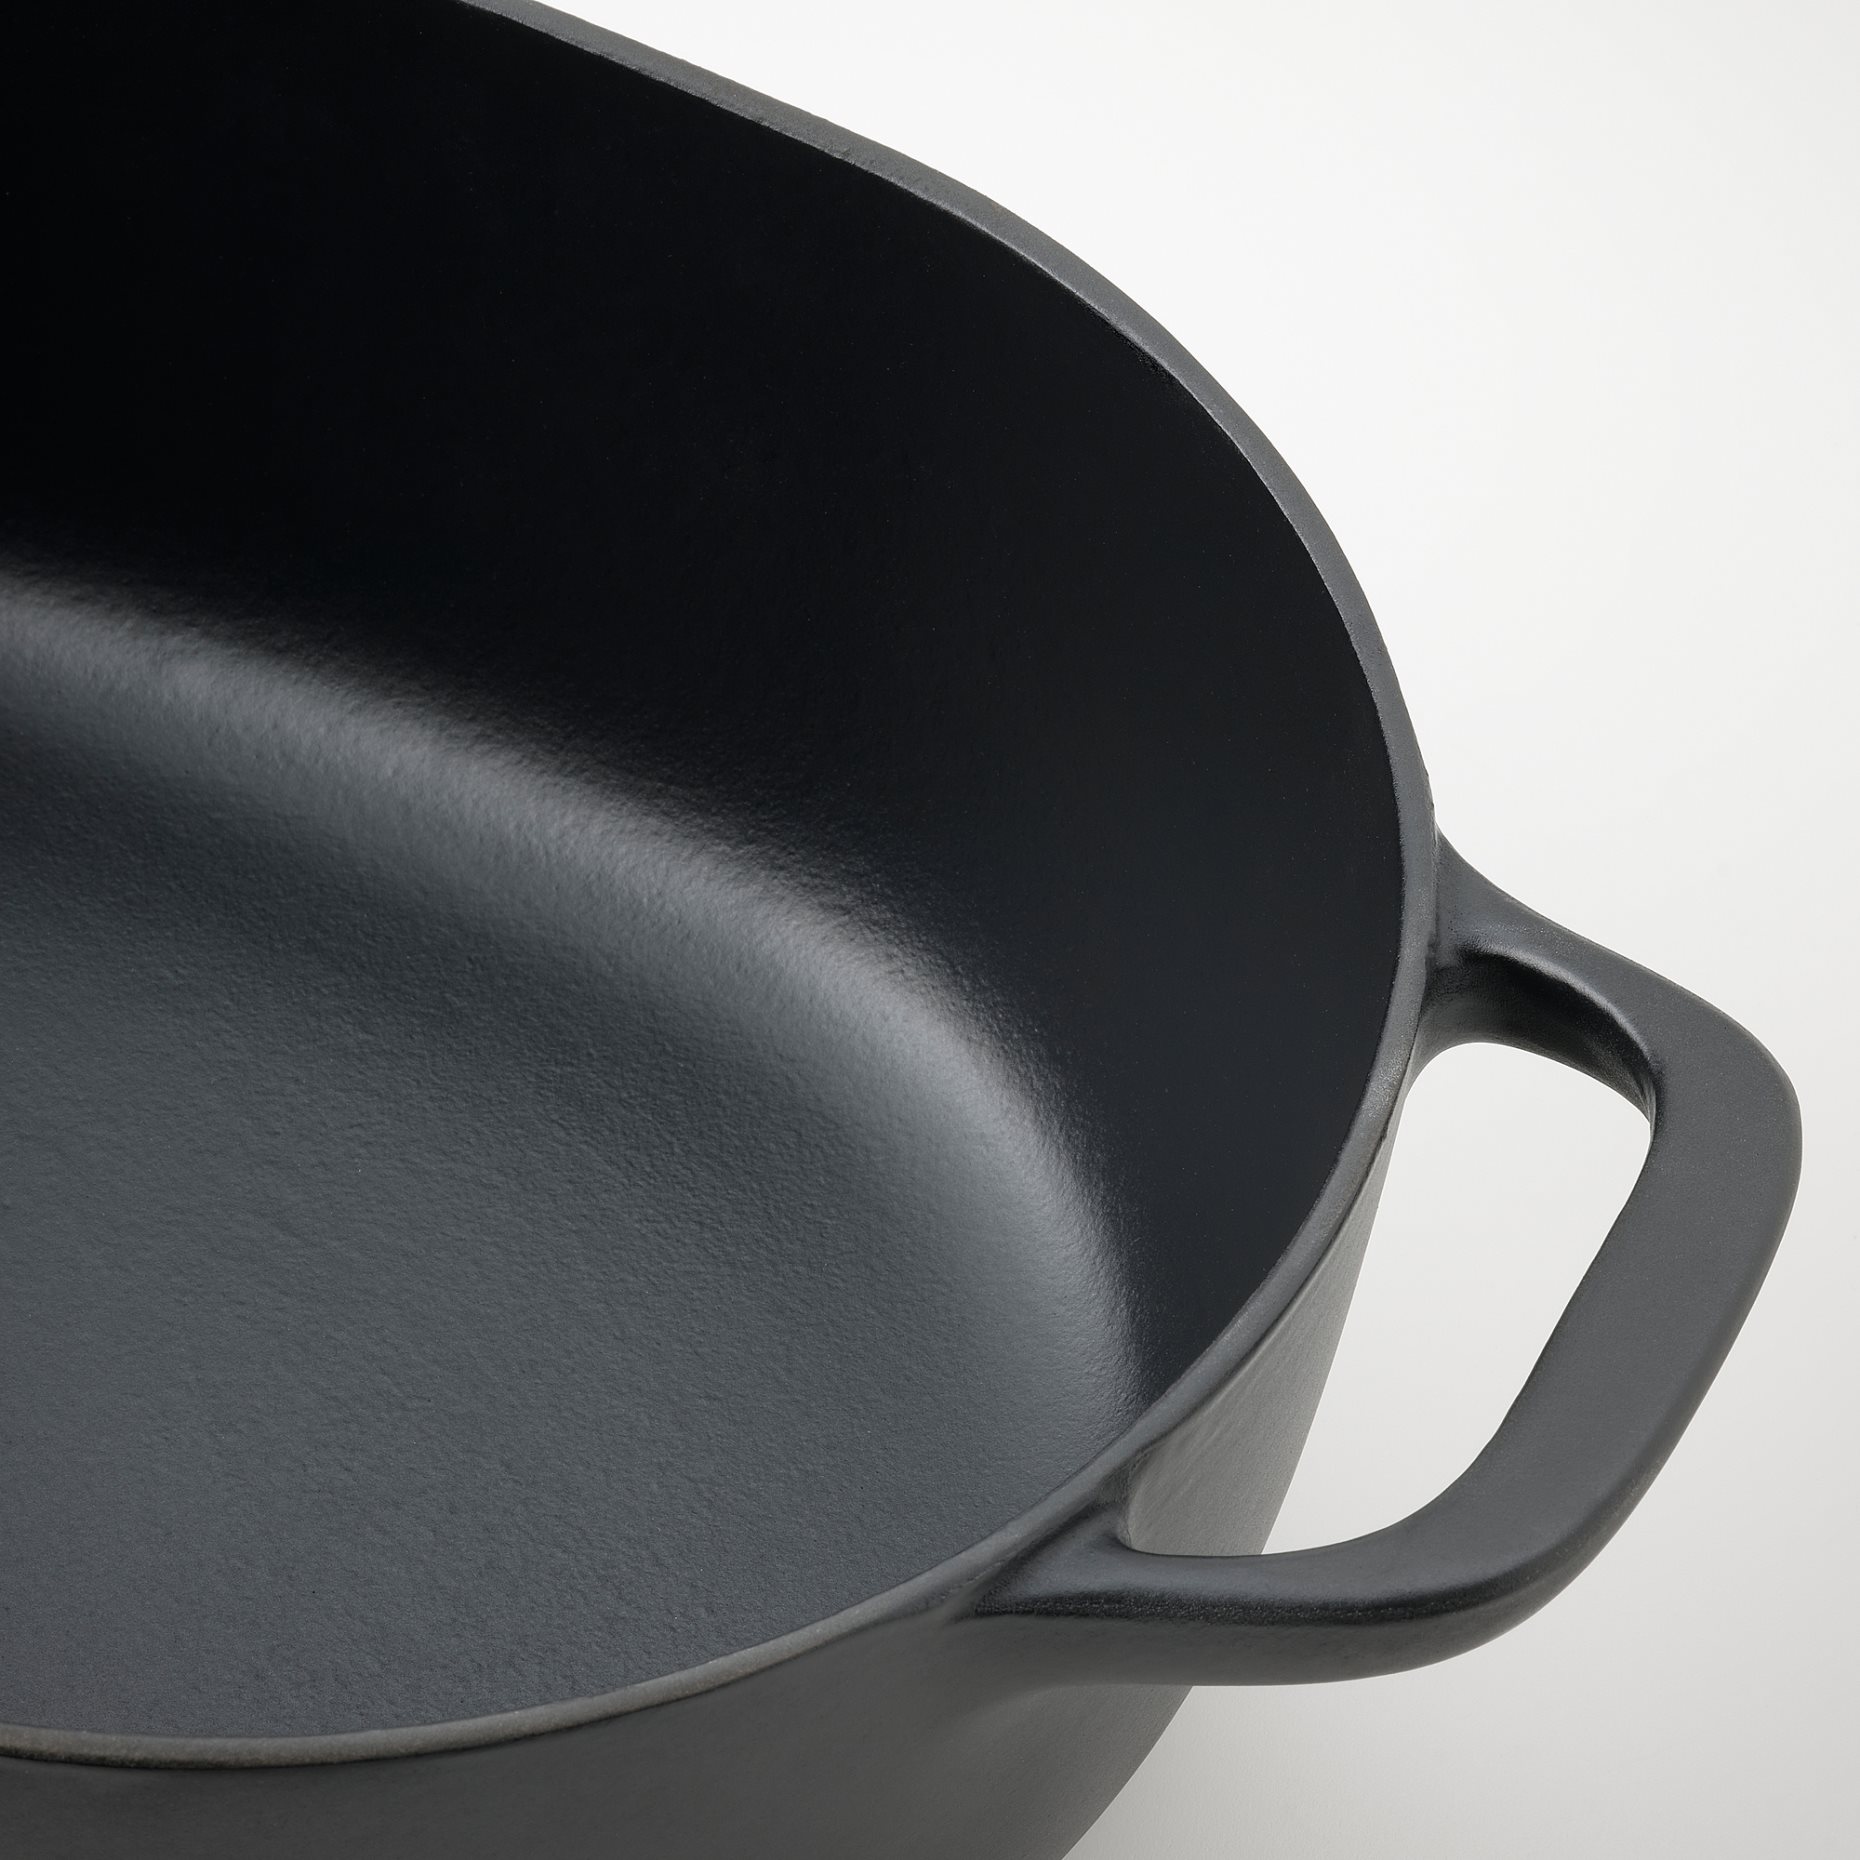 VARDAGEN, casserole with lid/enamelled cast iron matt, 6.5 l, 005.606.71